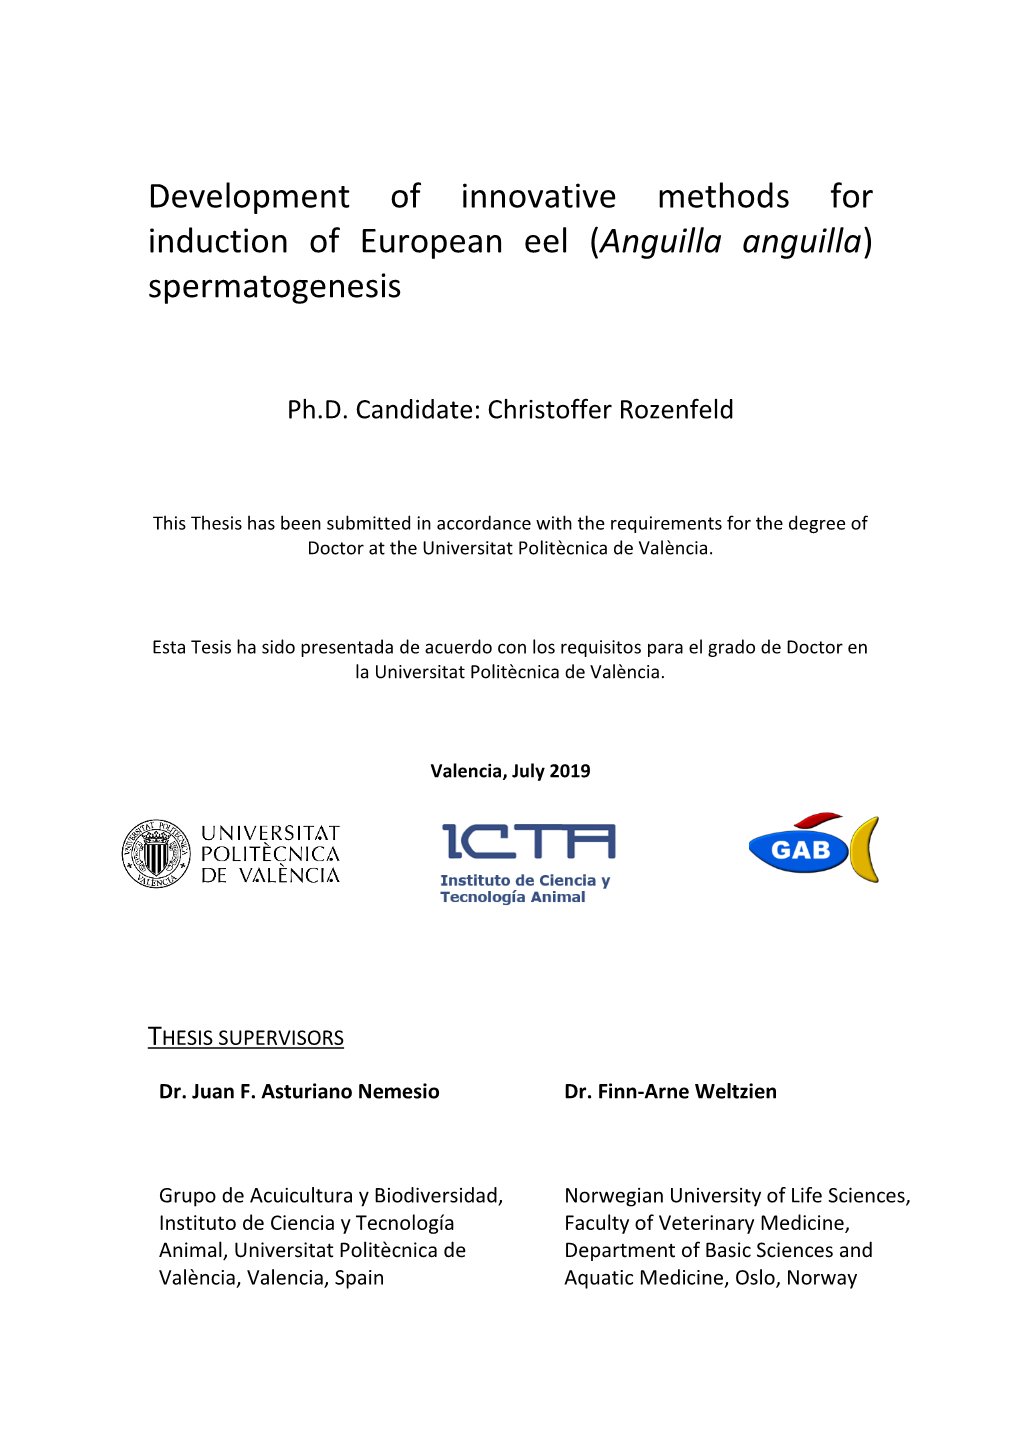 Development of Innovative Methods for Induction of European Eel (Anguilla Anguilla) Spermatogenesis